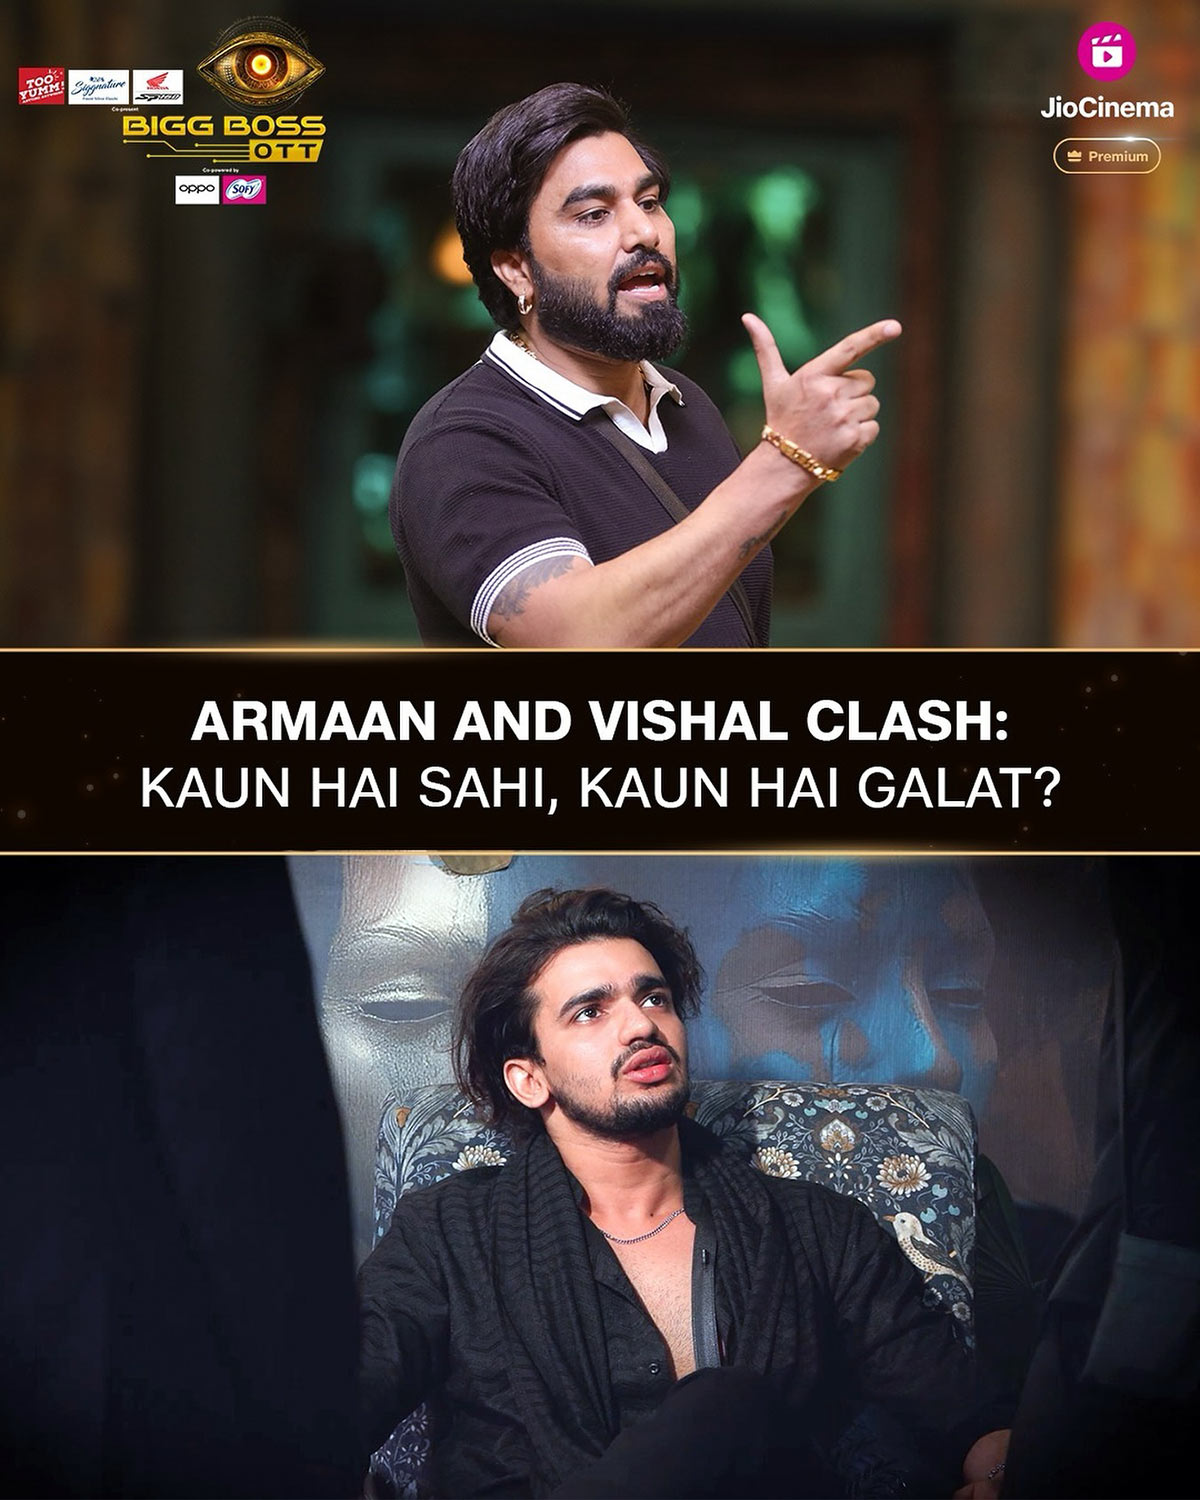 Should Armaan Have Slapped Vishal? VOTE!